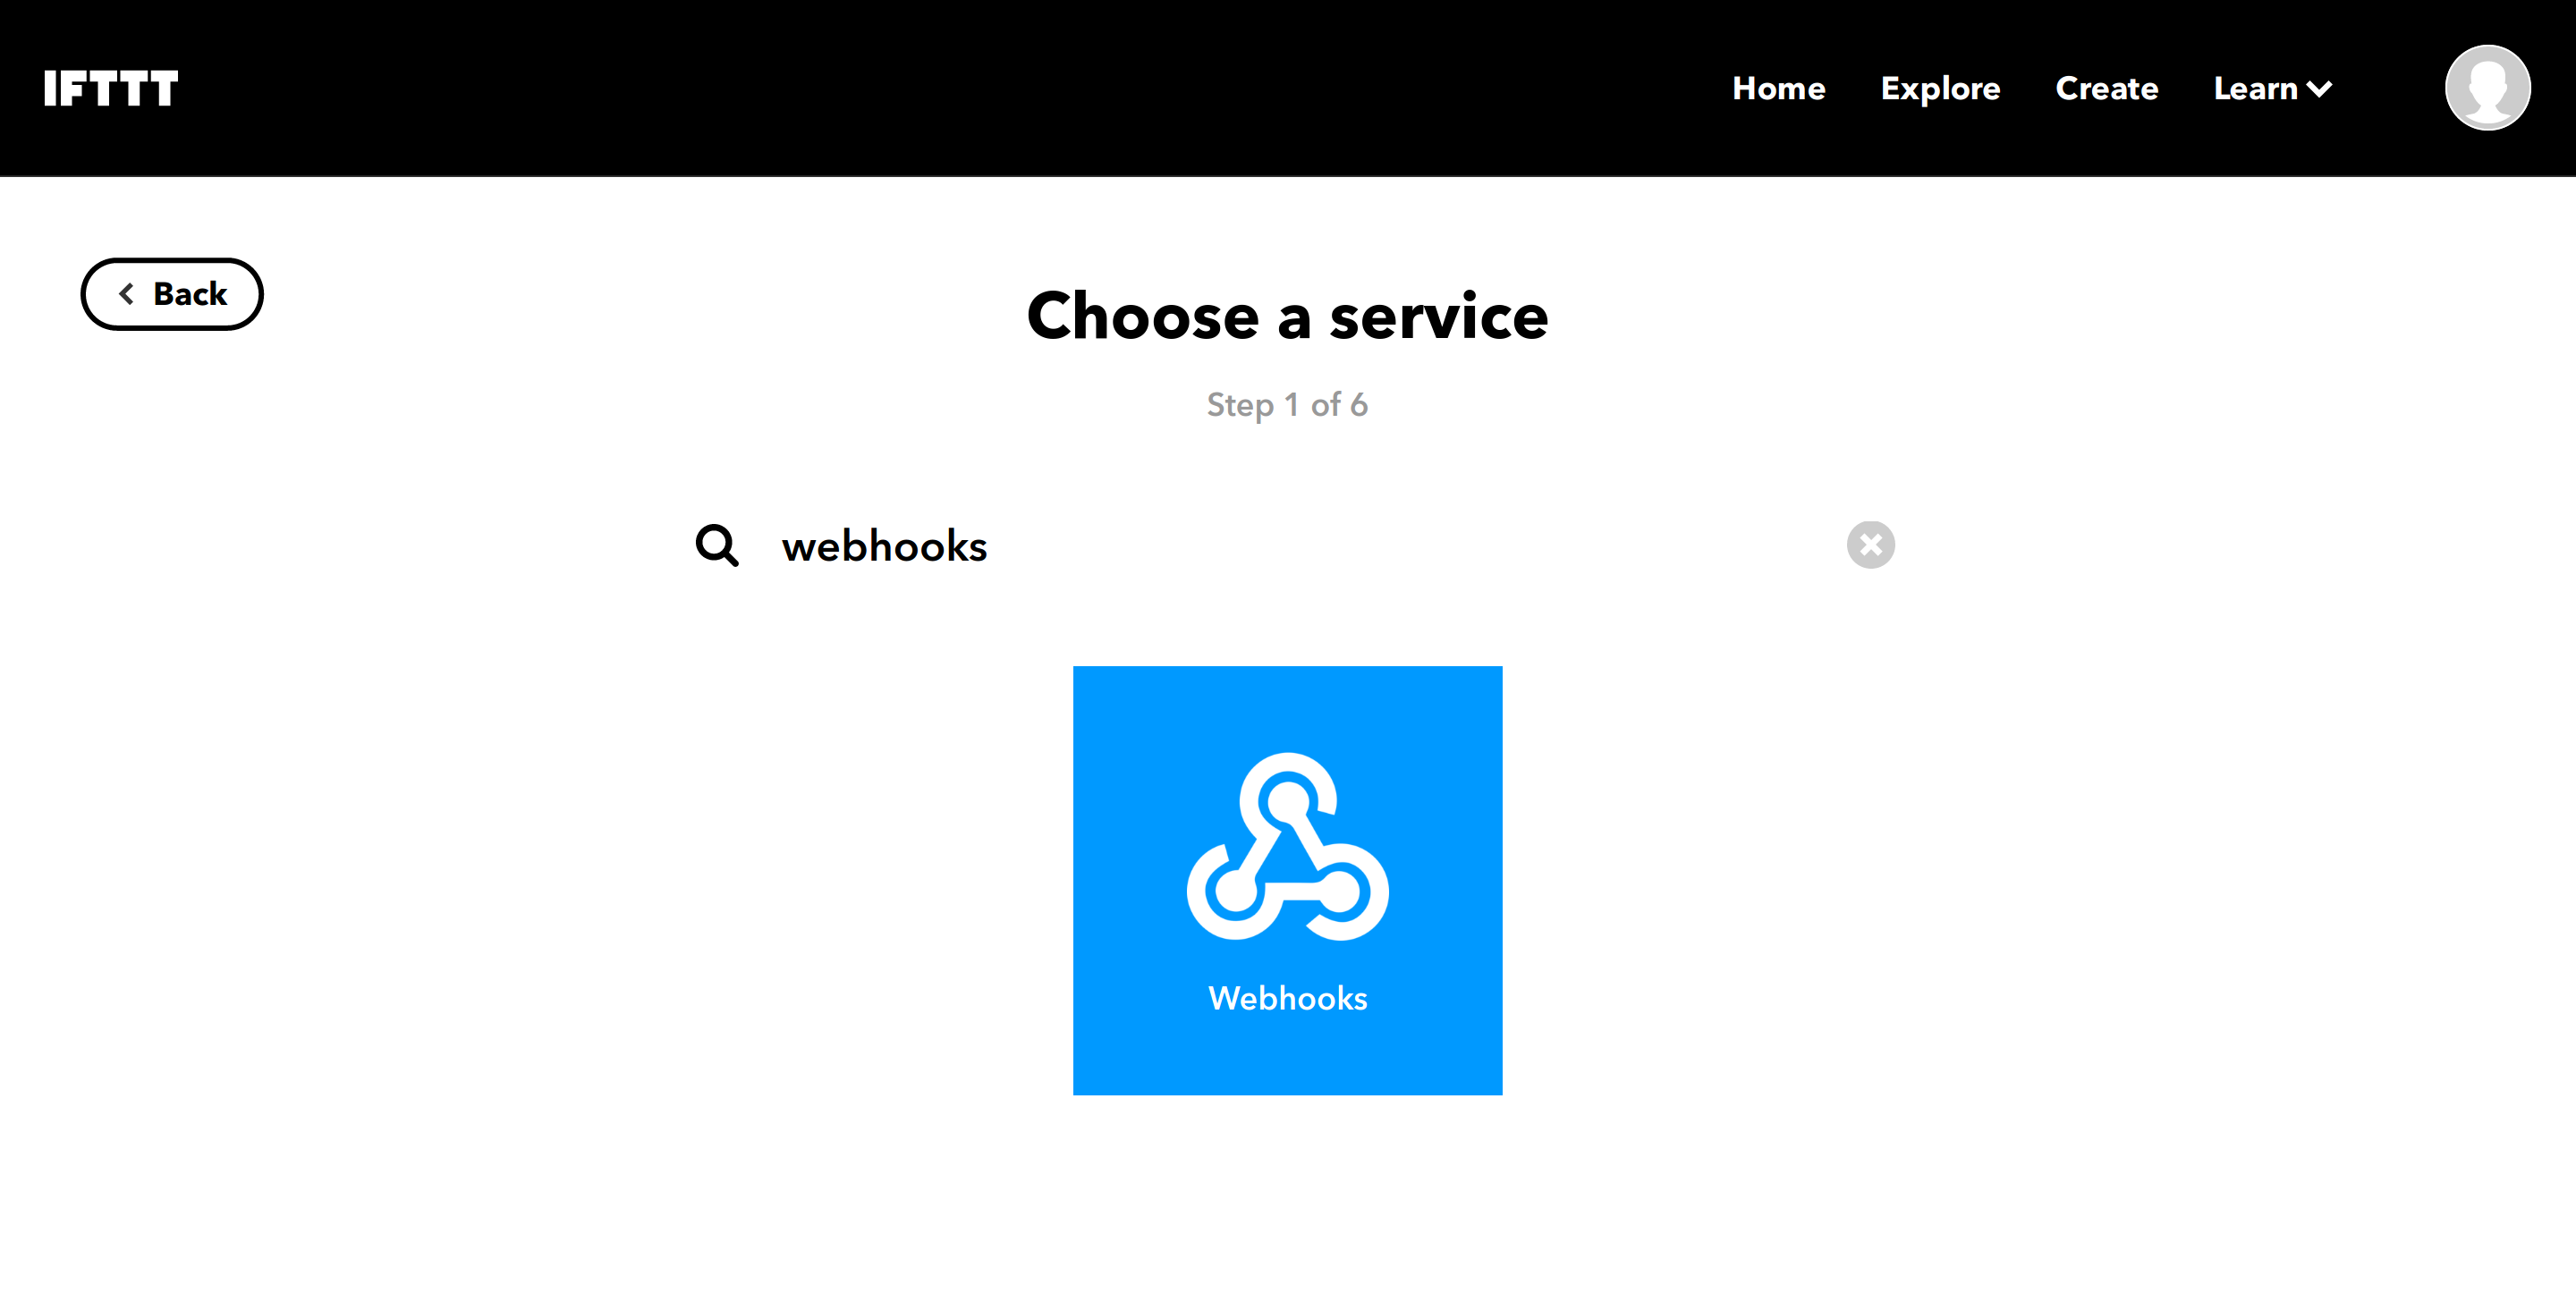 Choosing Webhooks as a service